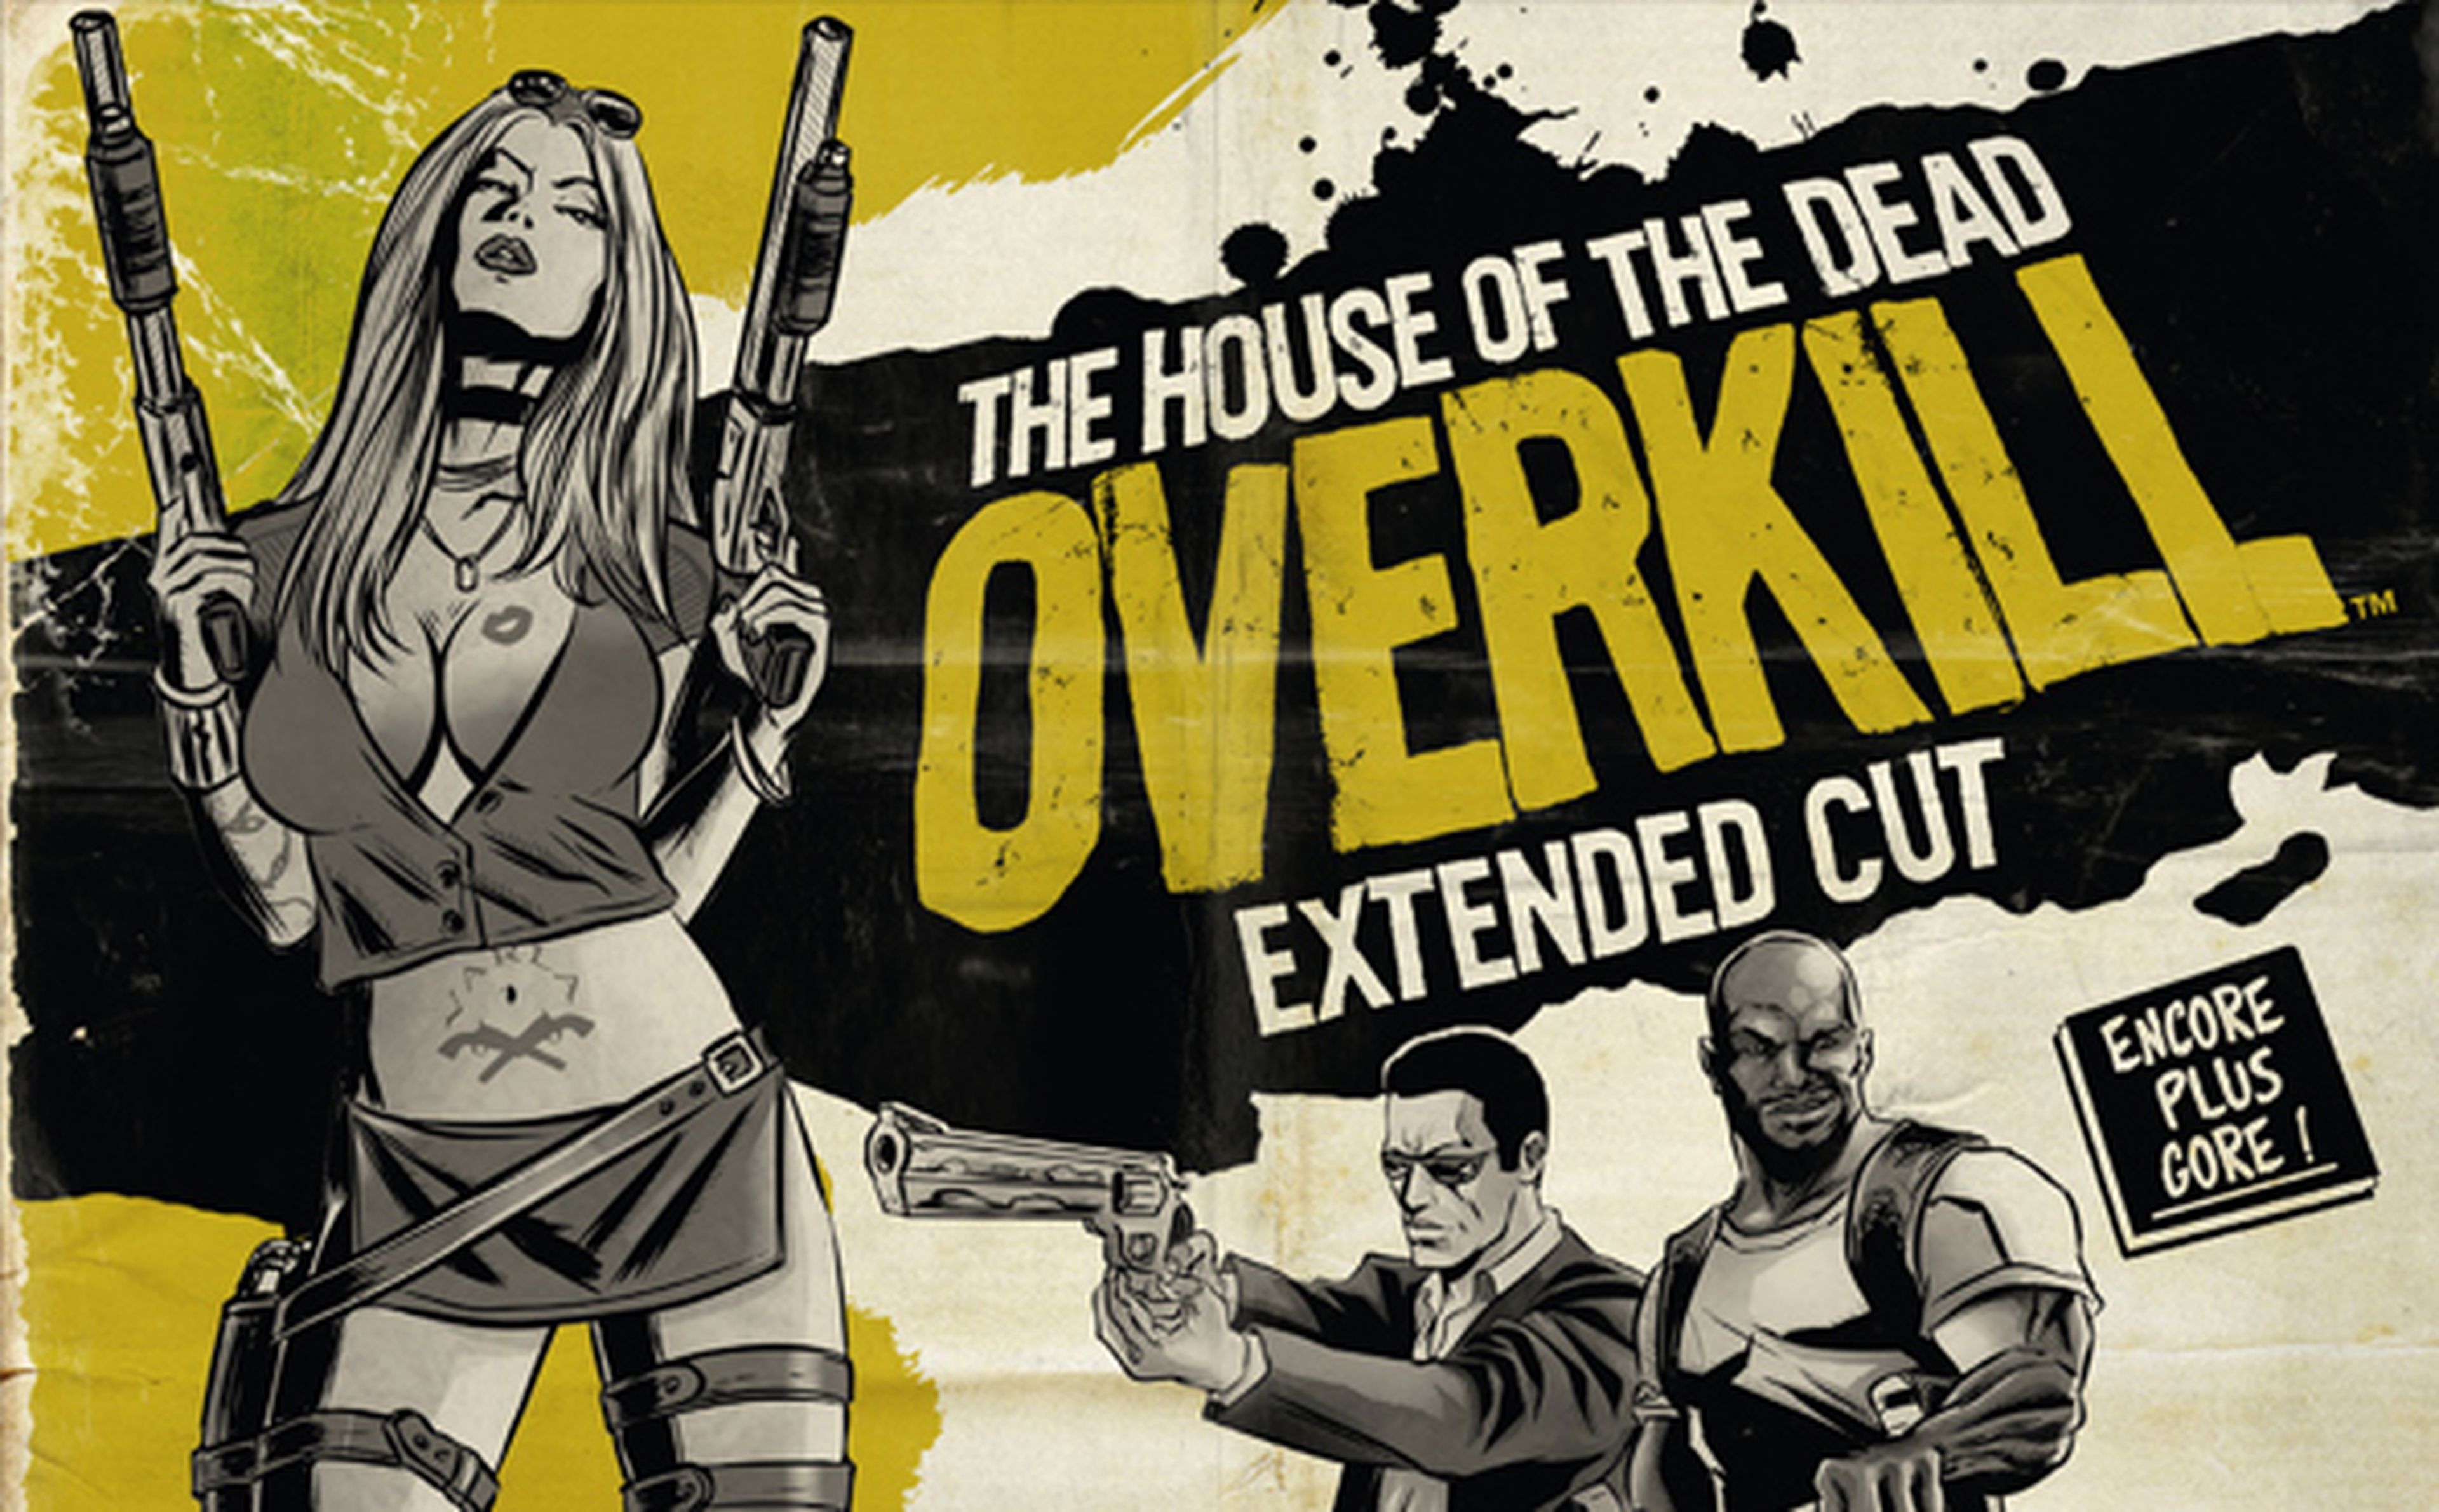 Descubre los extras de Overkill Extended Cut